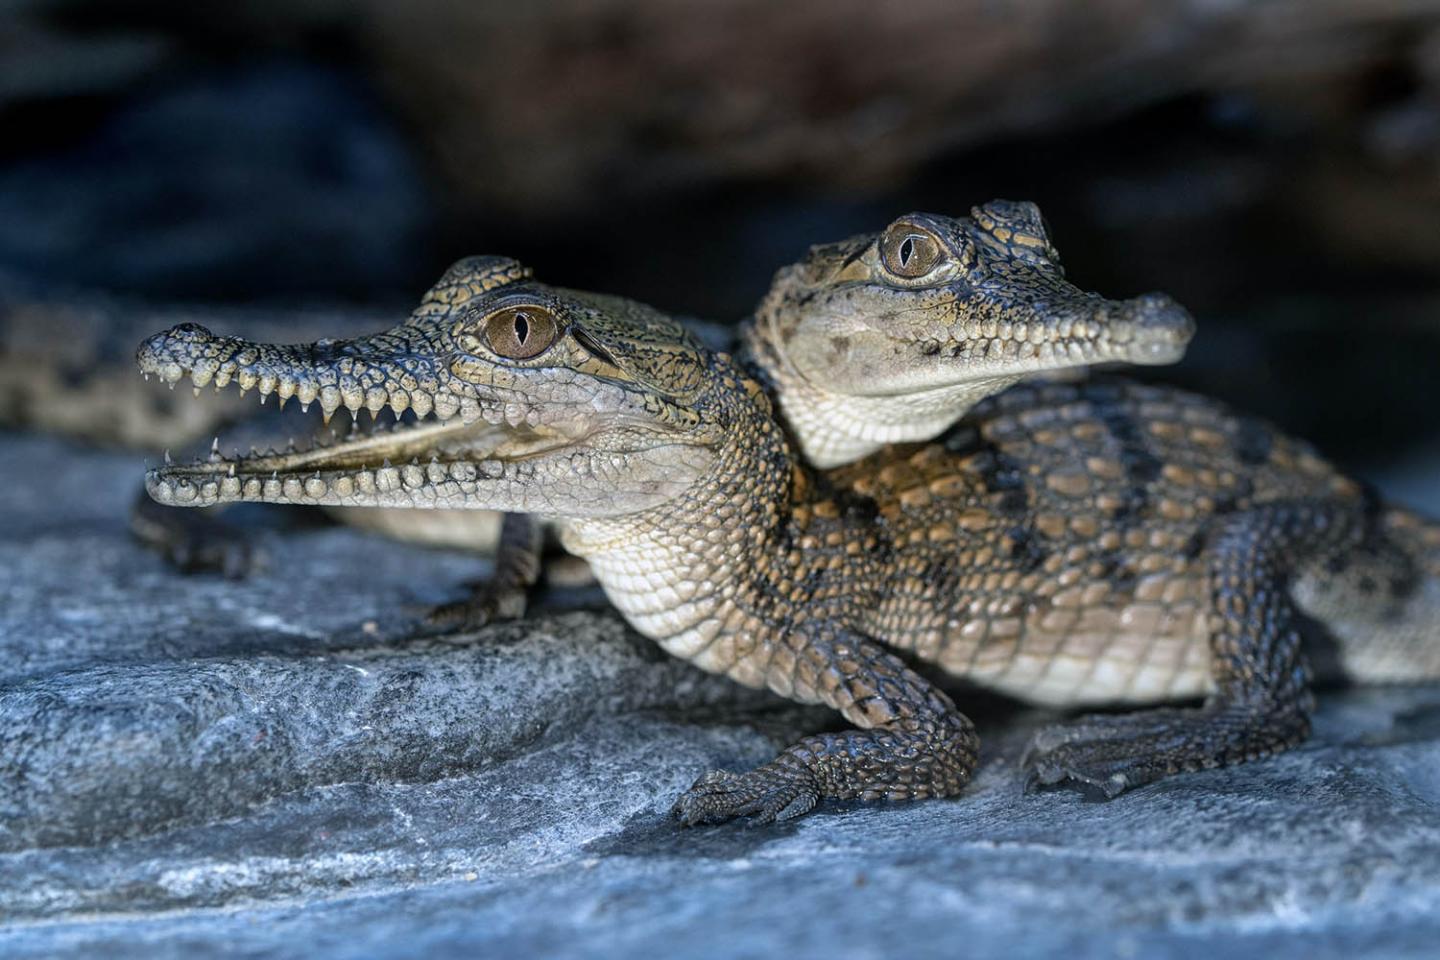 Two baby crocodiles